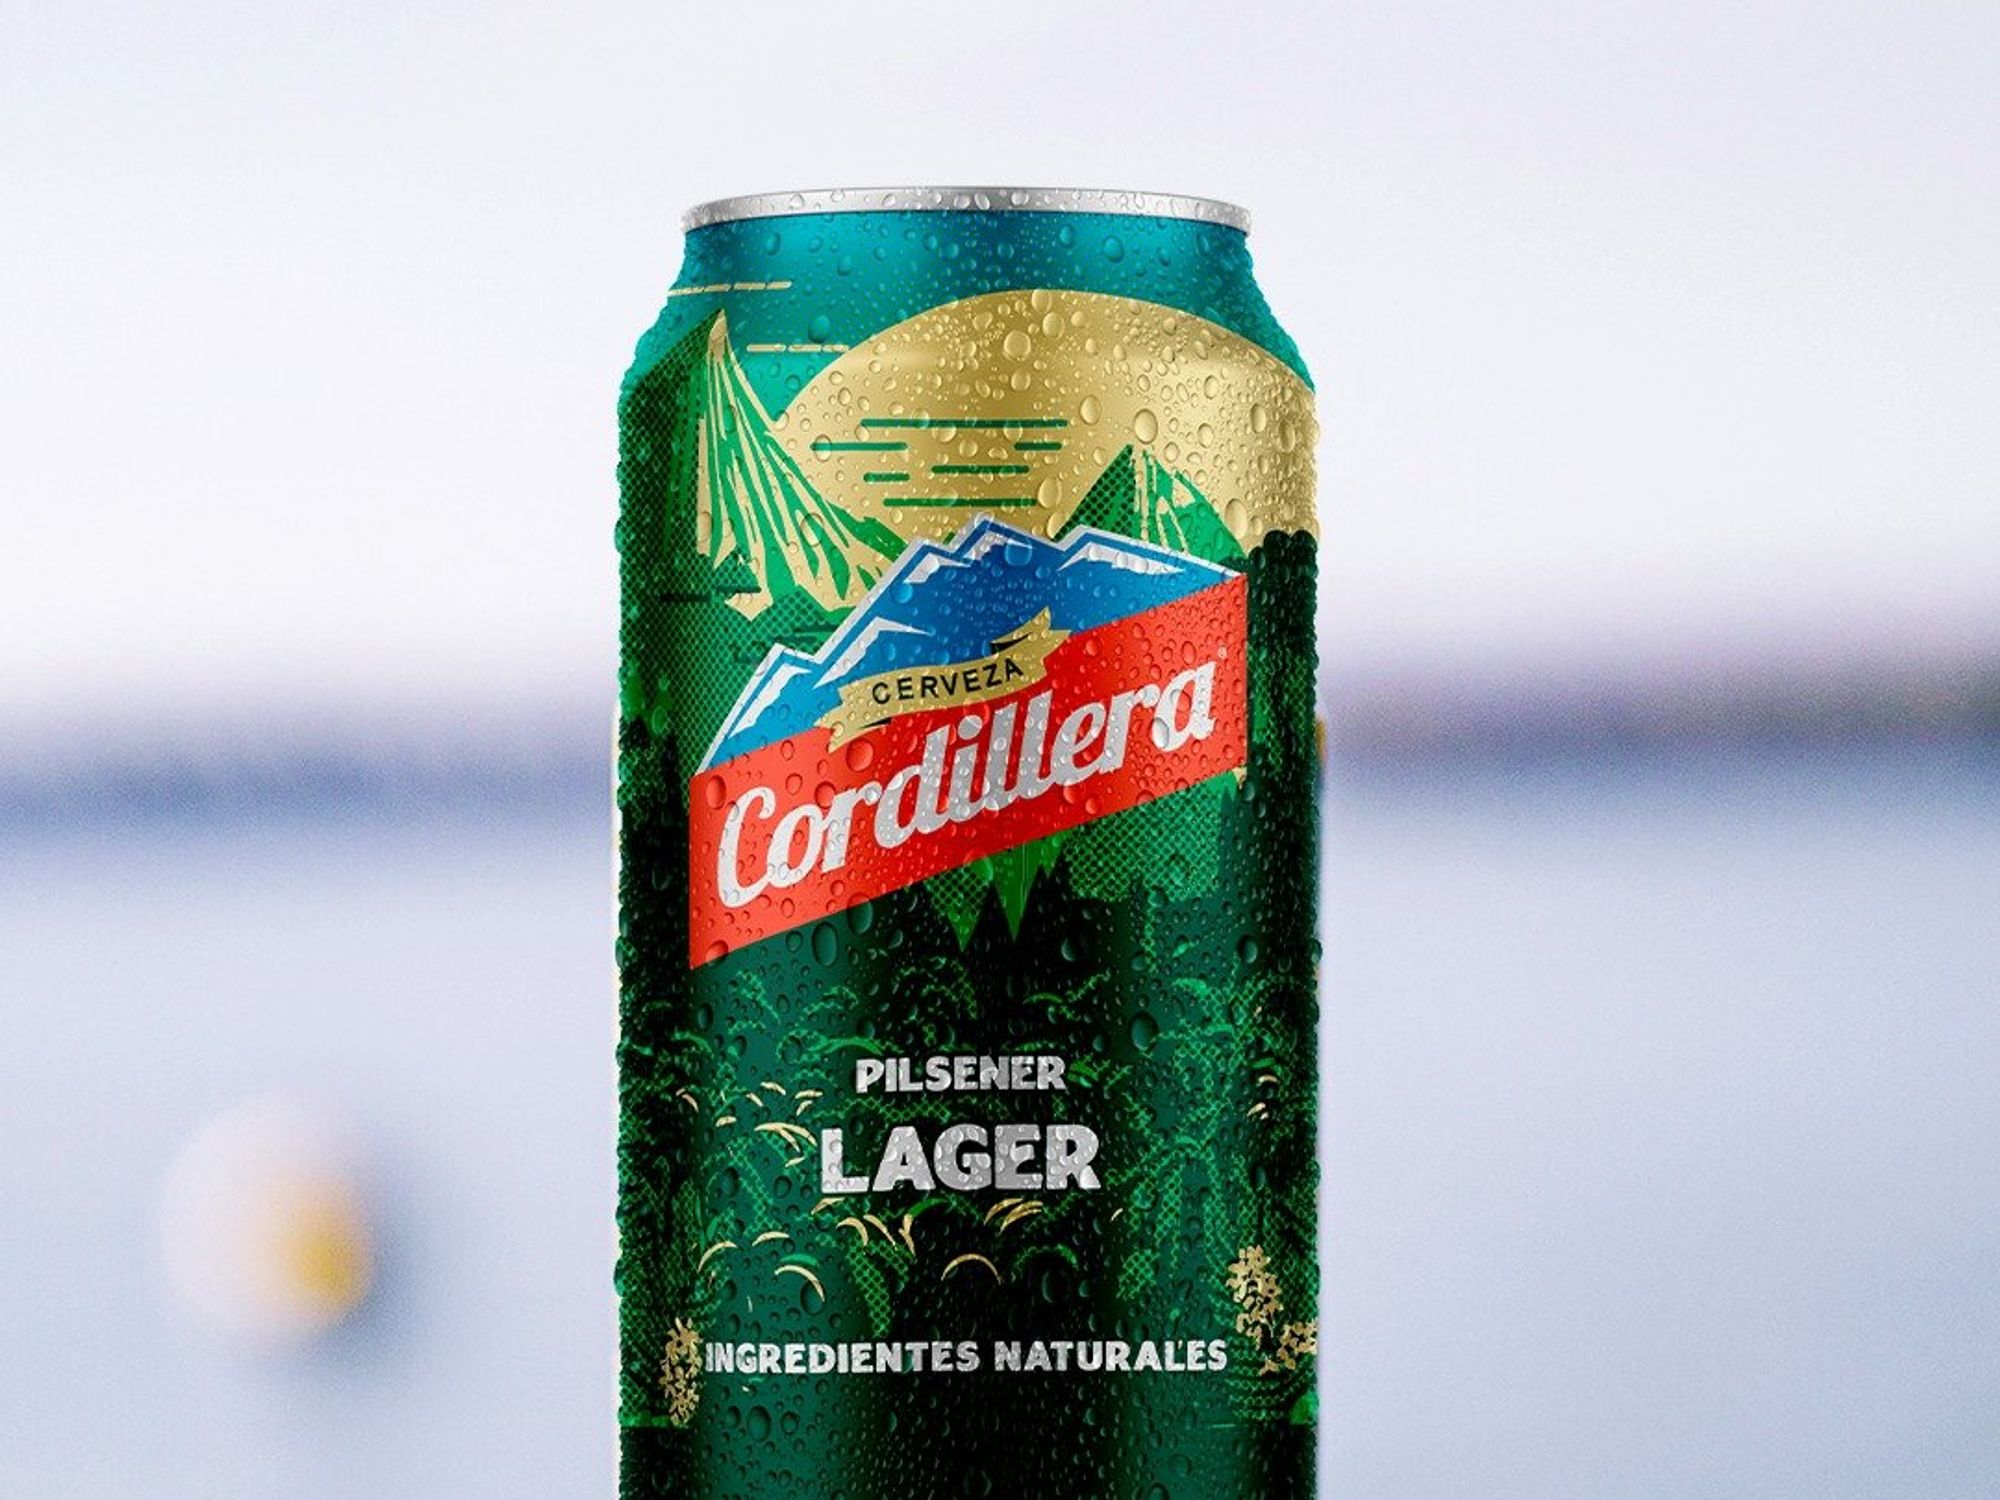 Promotional shot of Bolivian 'Cordillera' Beer.